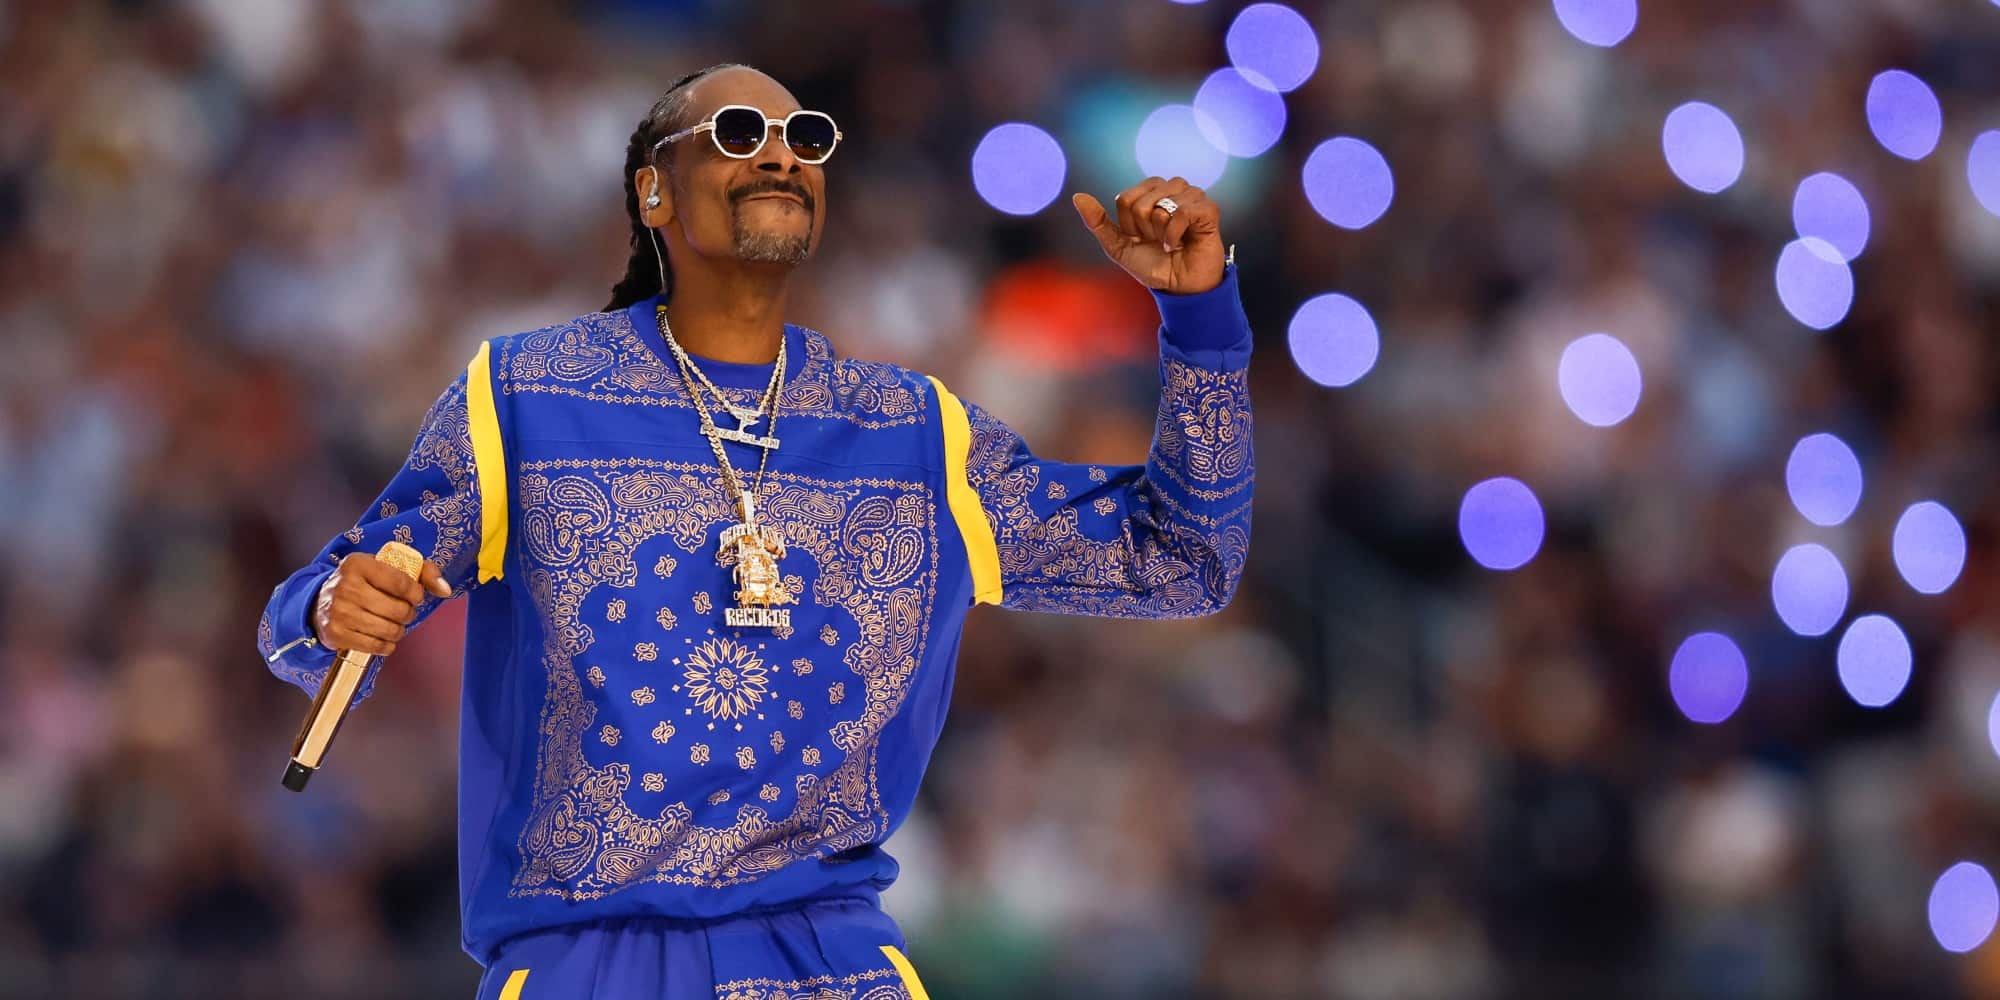 snoop dog 11 8 2022 1 - Ο Snoop Dogg θα είναι παραγωγός και πρωταγωνιστής στη νέα κωμωδία «The Underdoggs» - «Είναι προσωπικό πρότζεκτ»